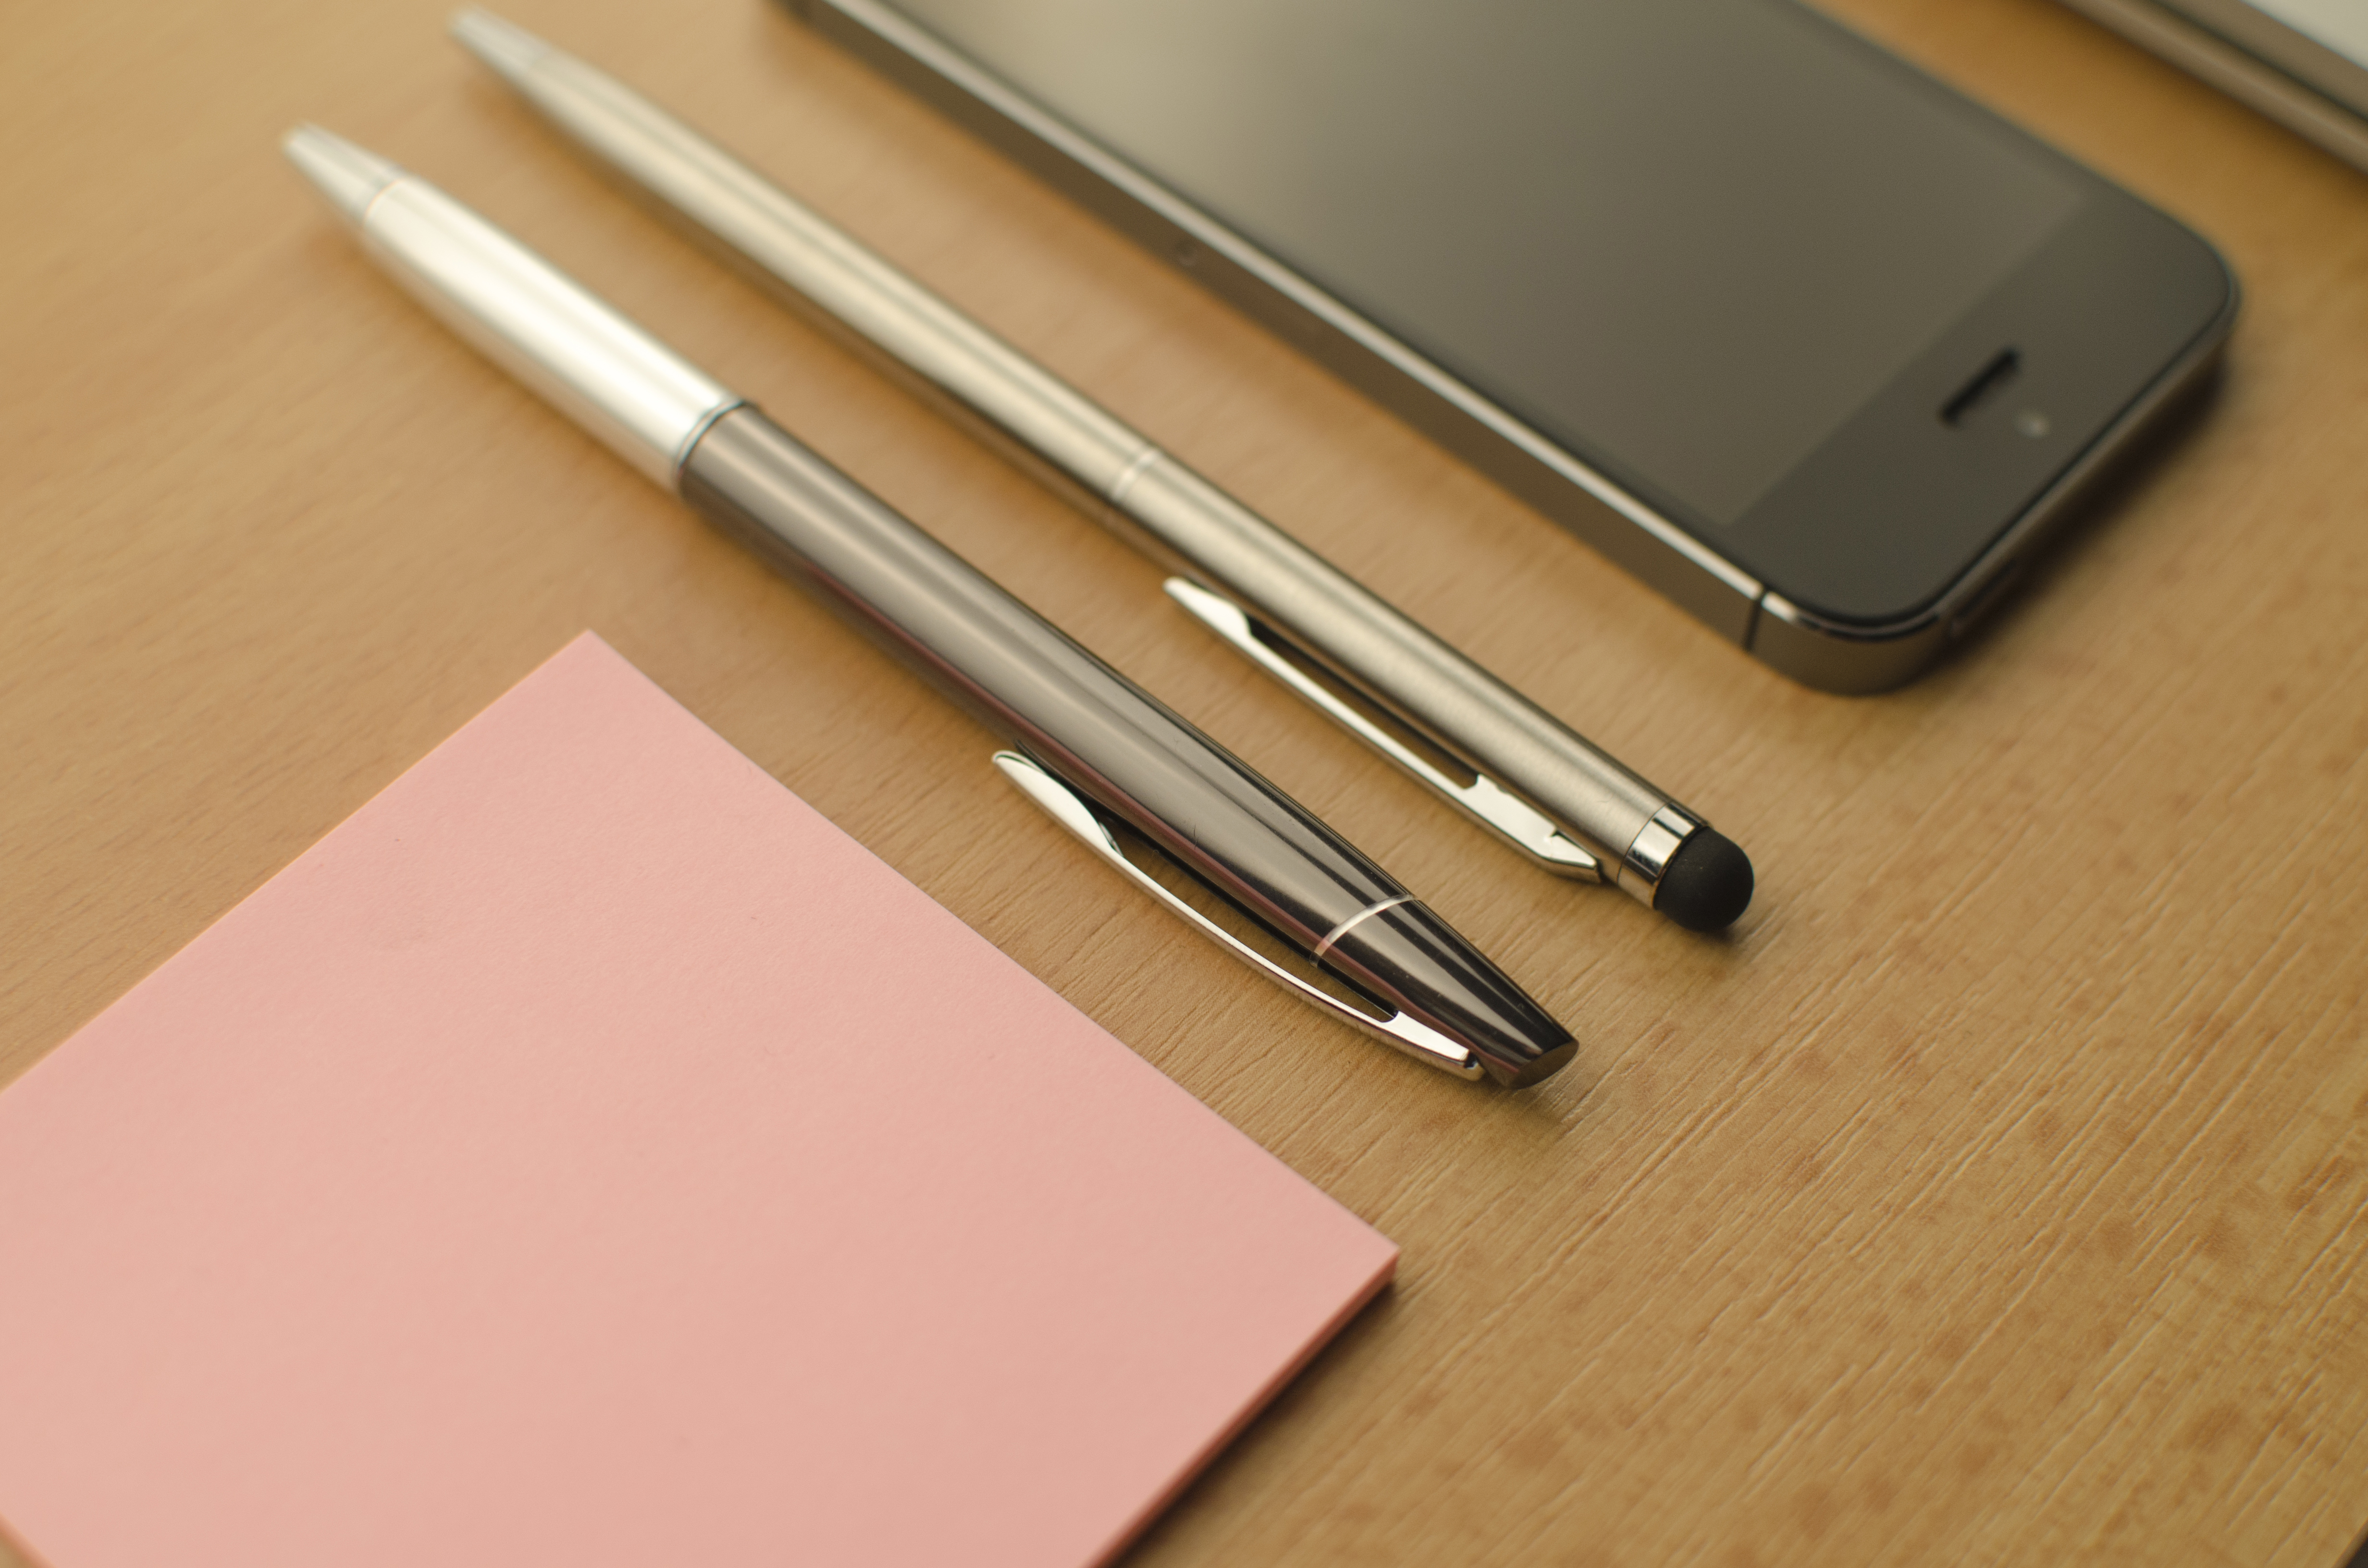 There pens on the table. Ручка на столе. Авторучка. Ручка макбук блокнот айфон. Ручка бумага карандаш в стол много.